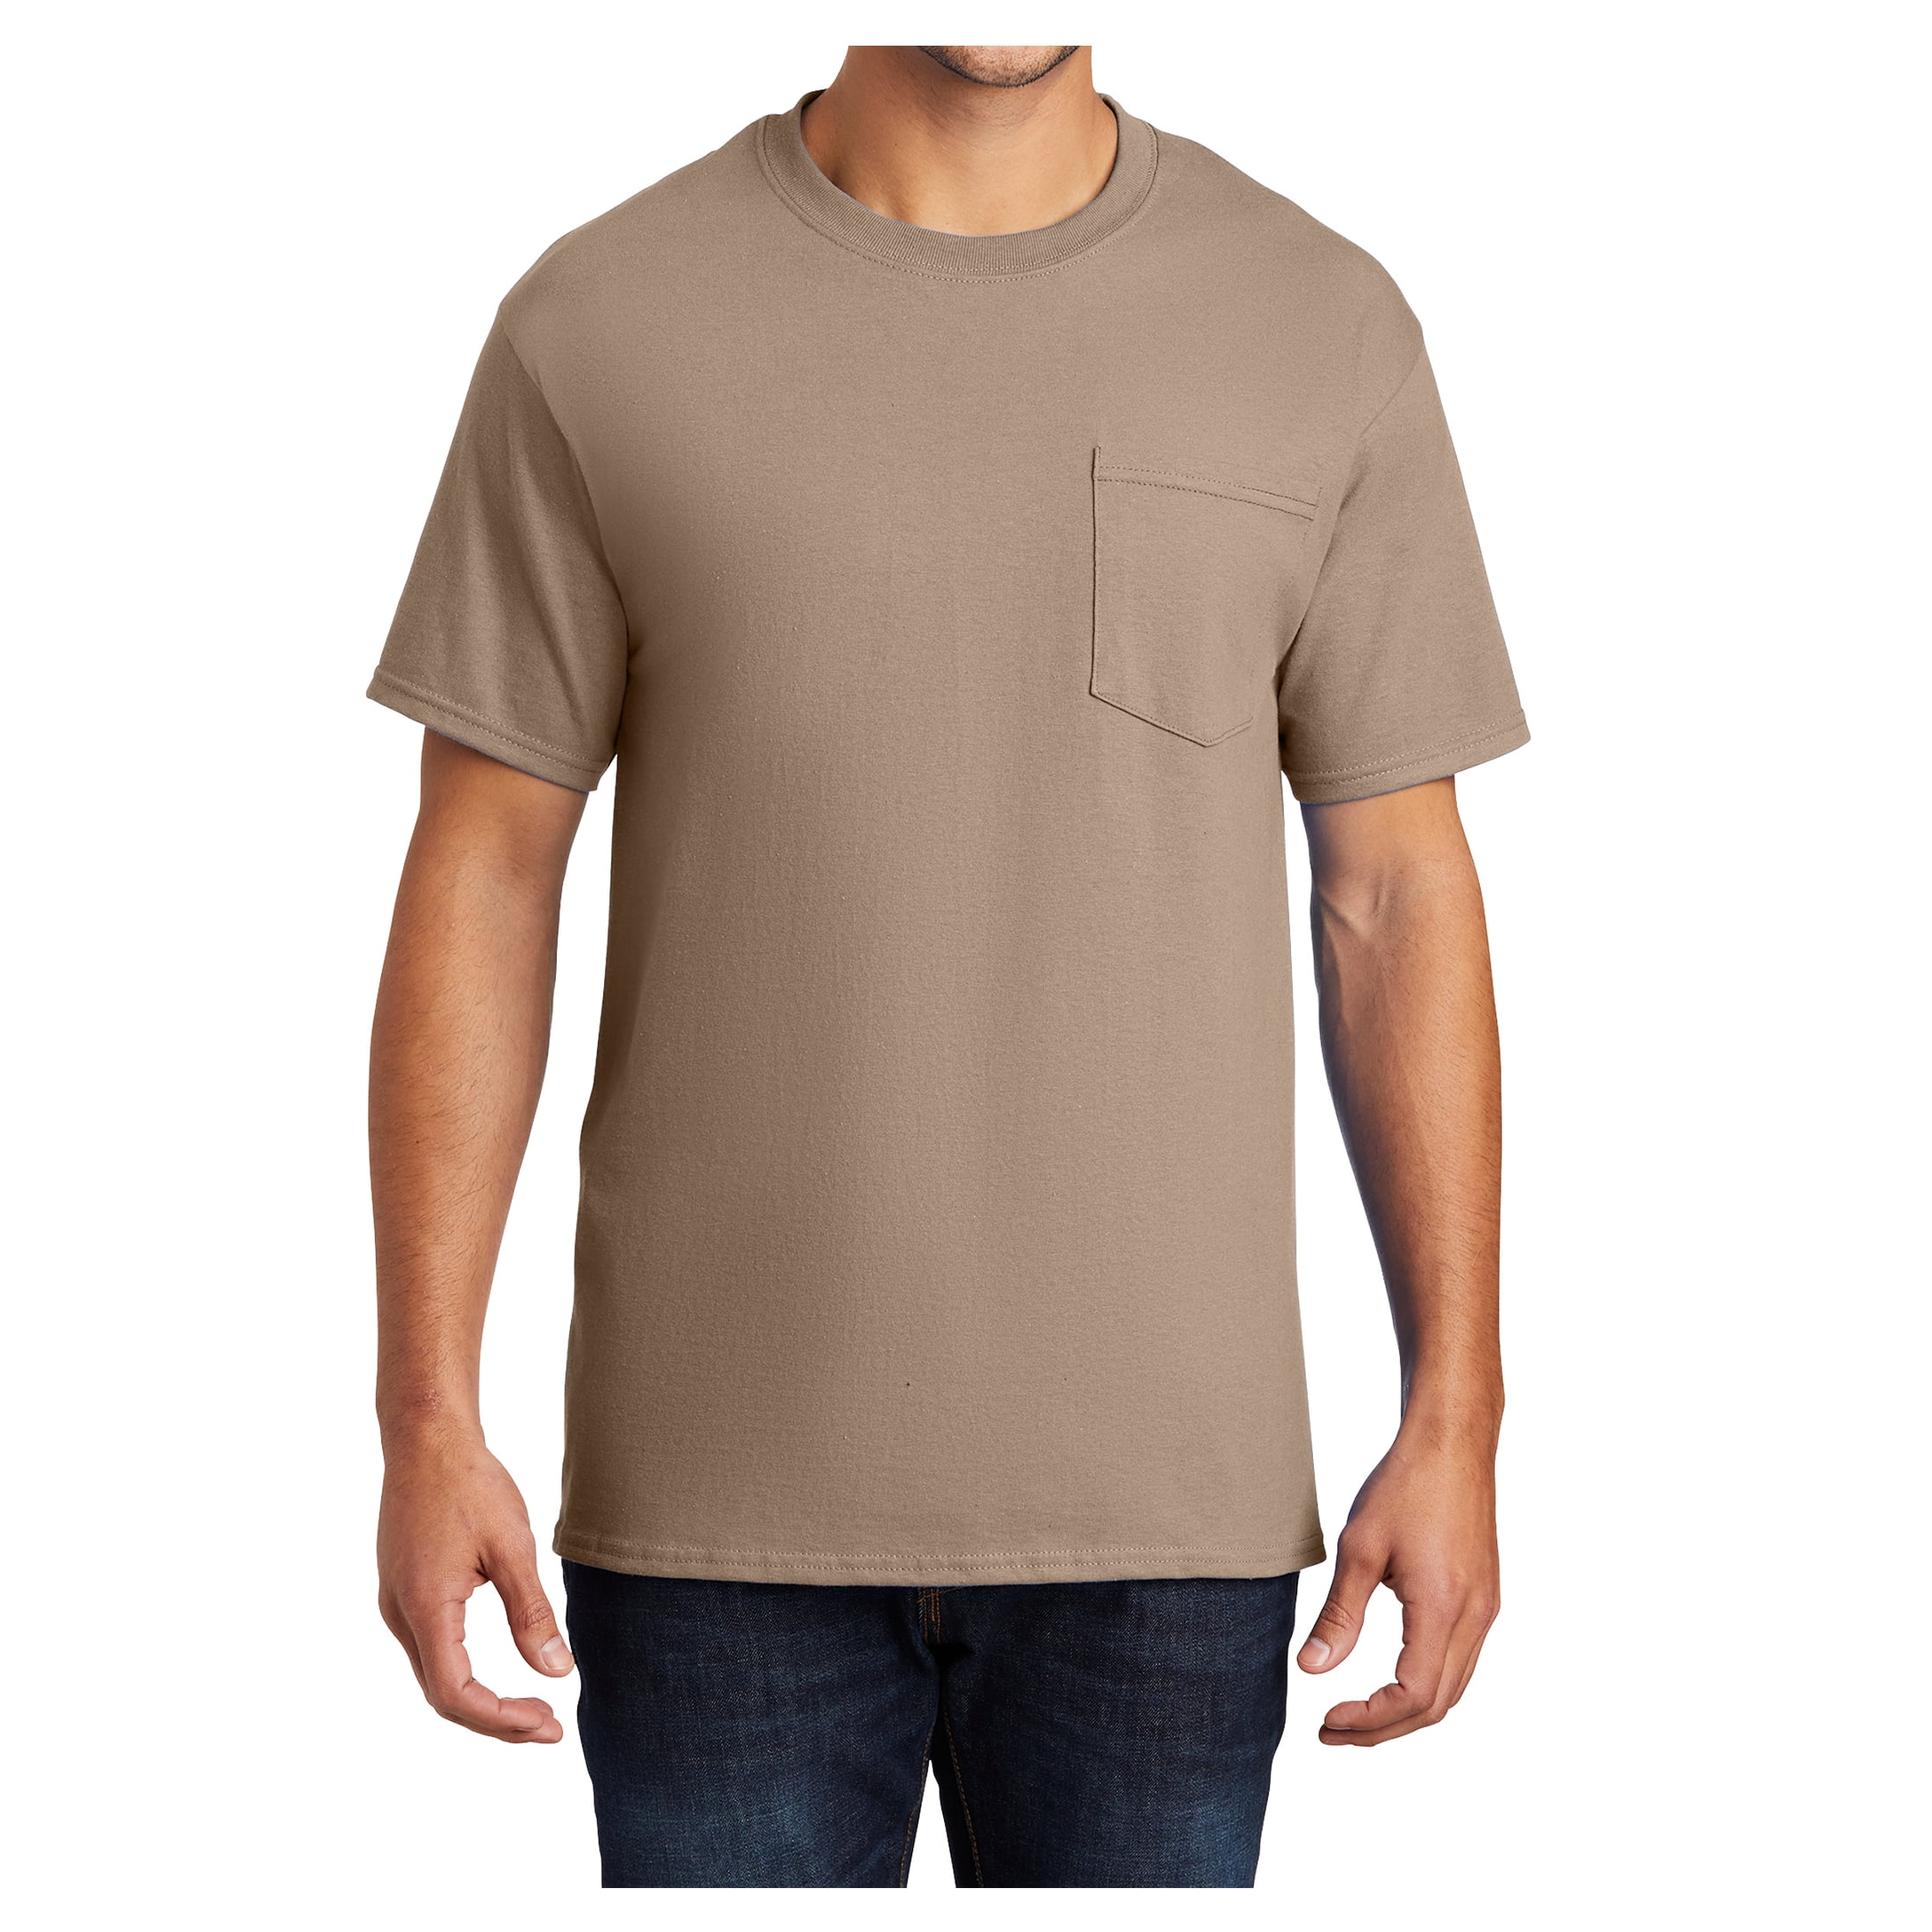 Mens Essential Cotton T Shirt with Pocket Sand 4XL - Walmart.com